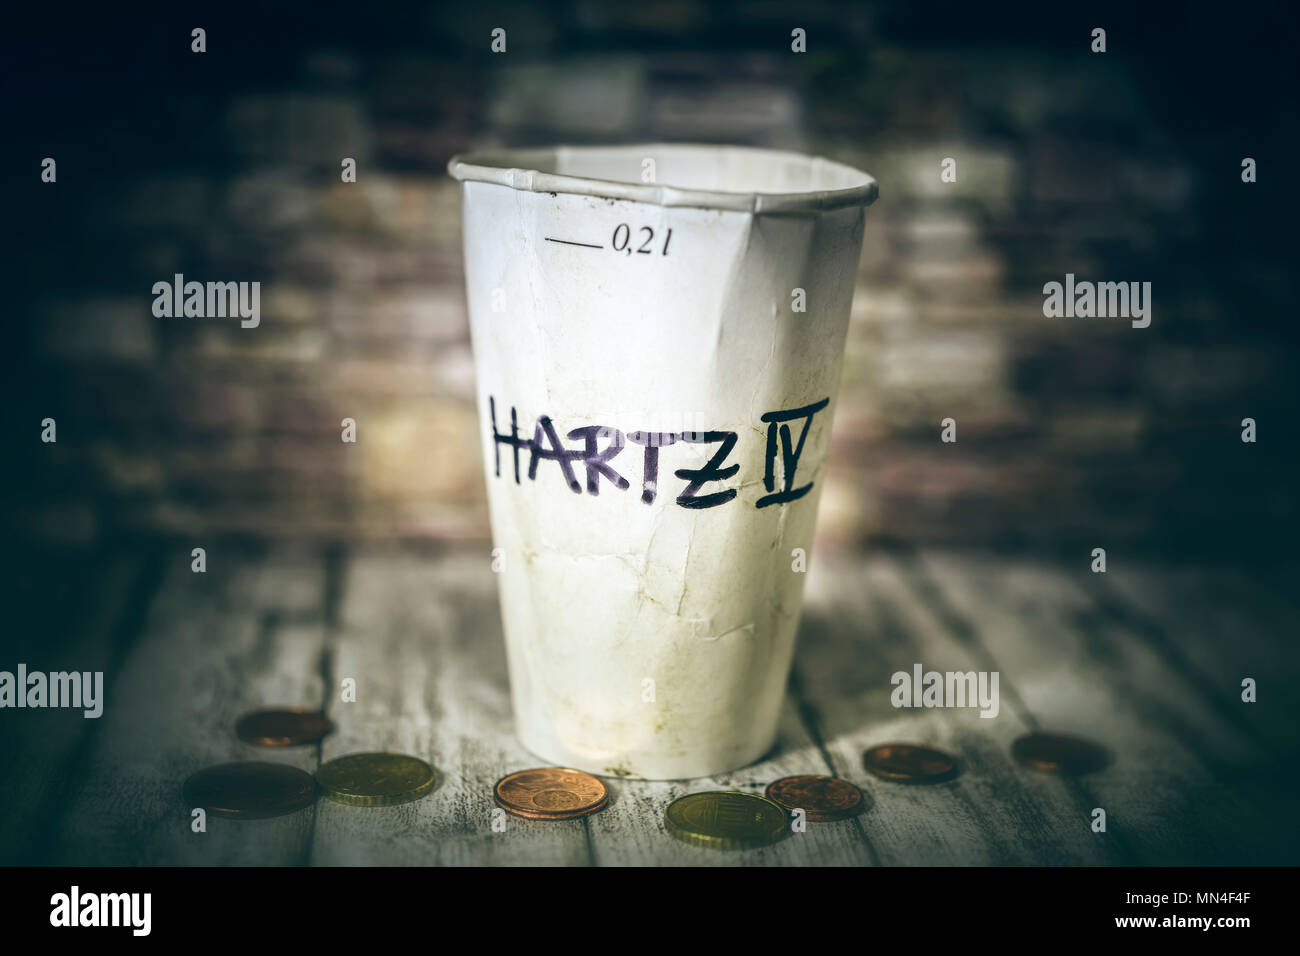 Donations cups with inscription Hartz IV, Spendenbecher mit Aufschrift Hartz IV Stock Photo